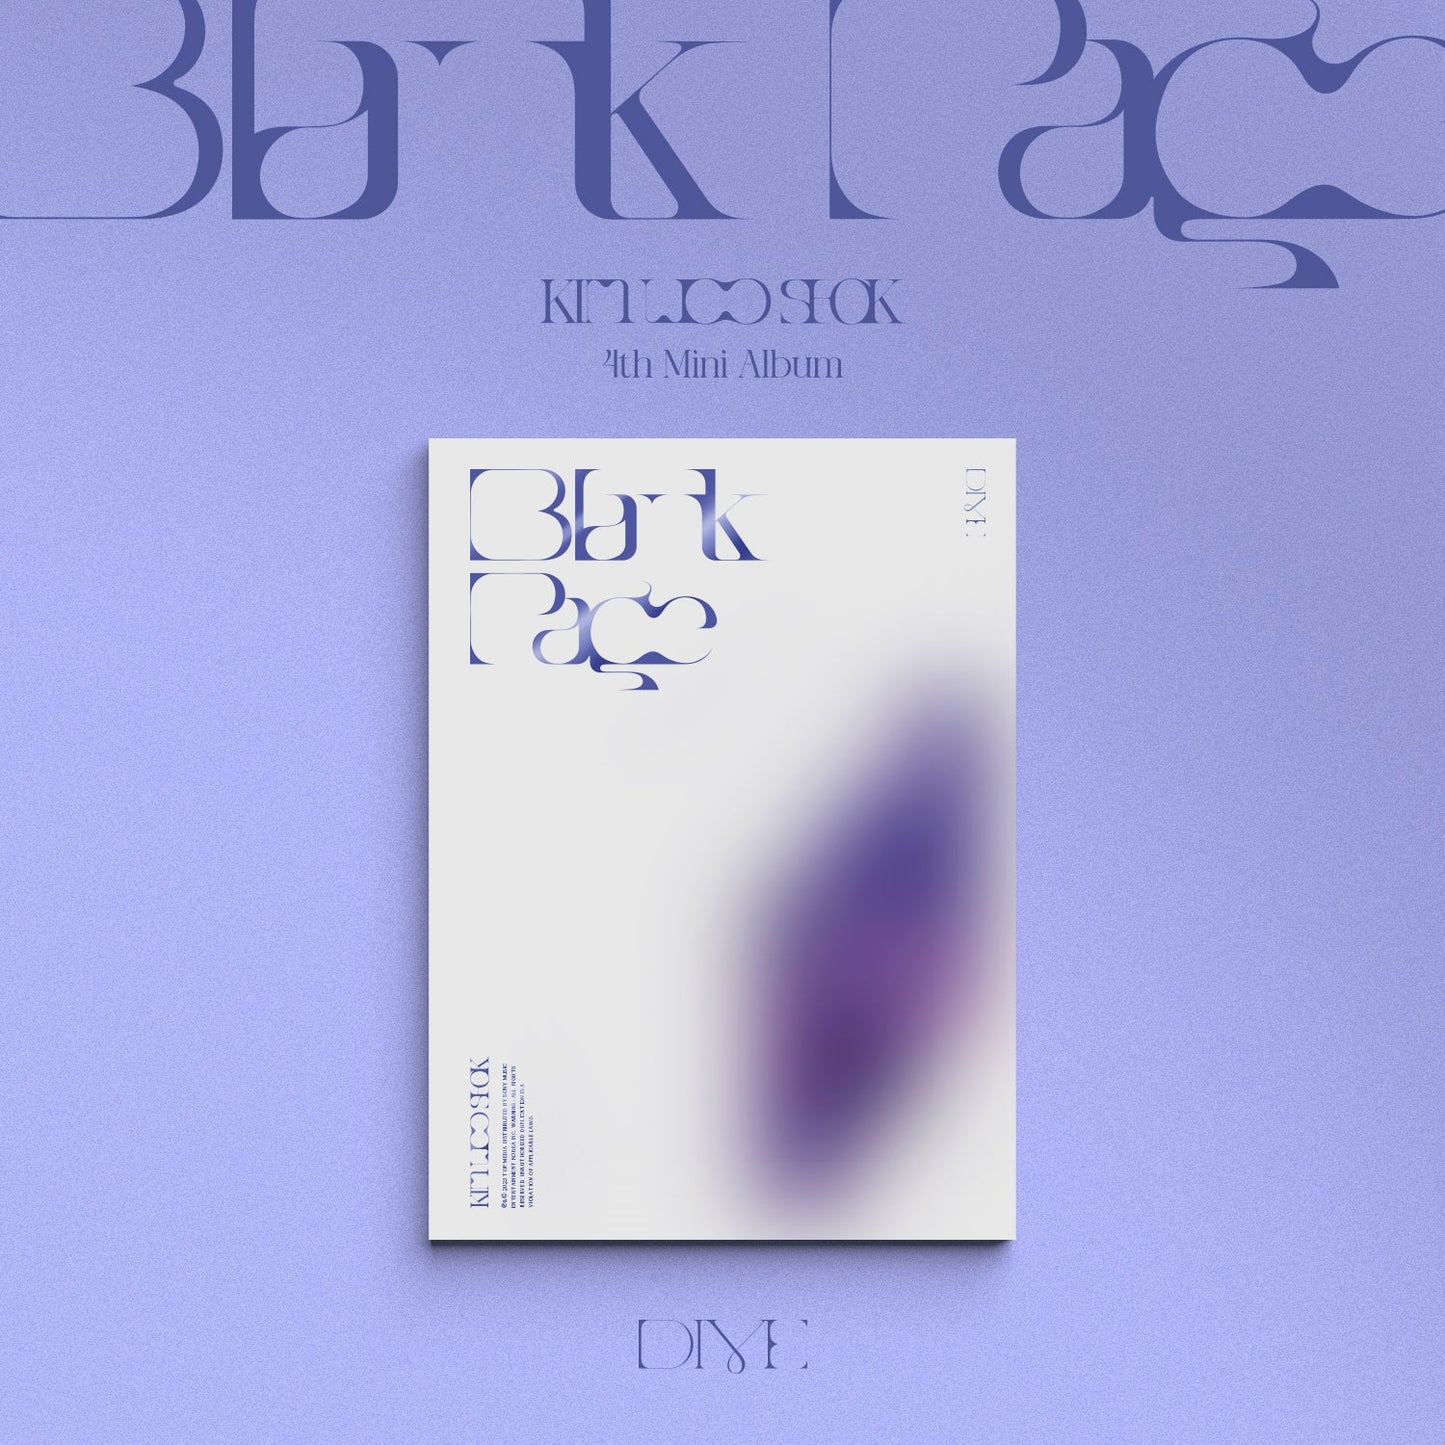 KIM WOO SEOK 4TH MINI ALBUM 'BLANK PAGE' DIVE VERSION COVER